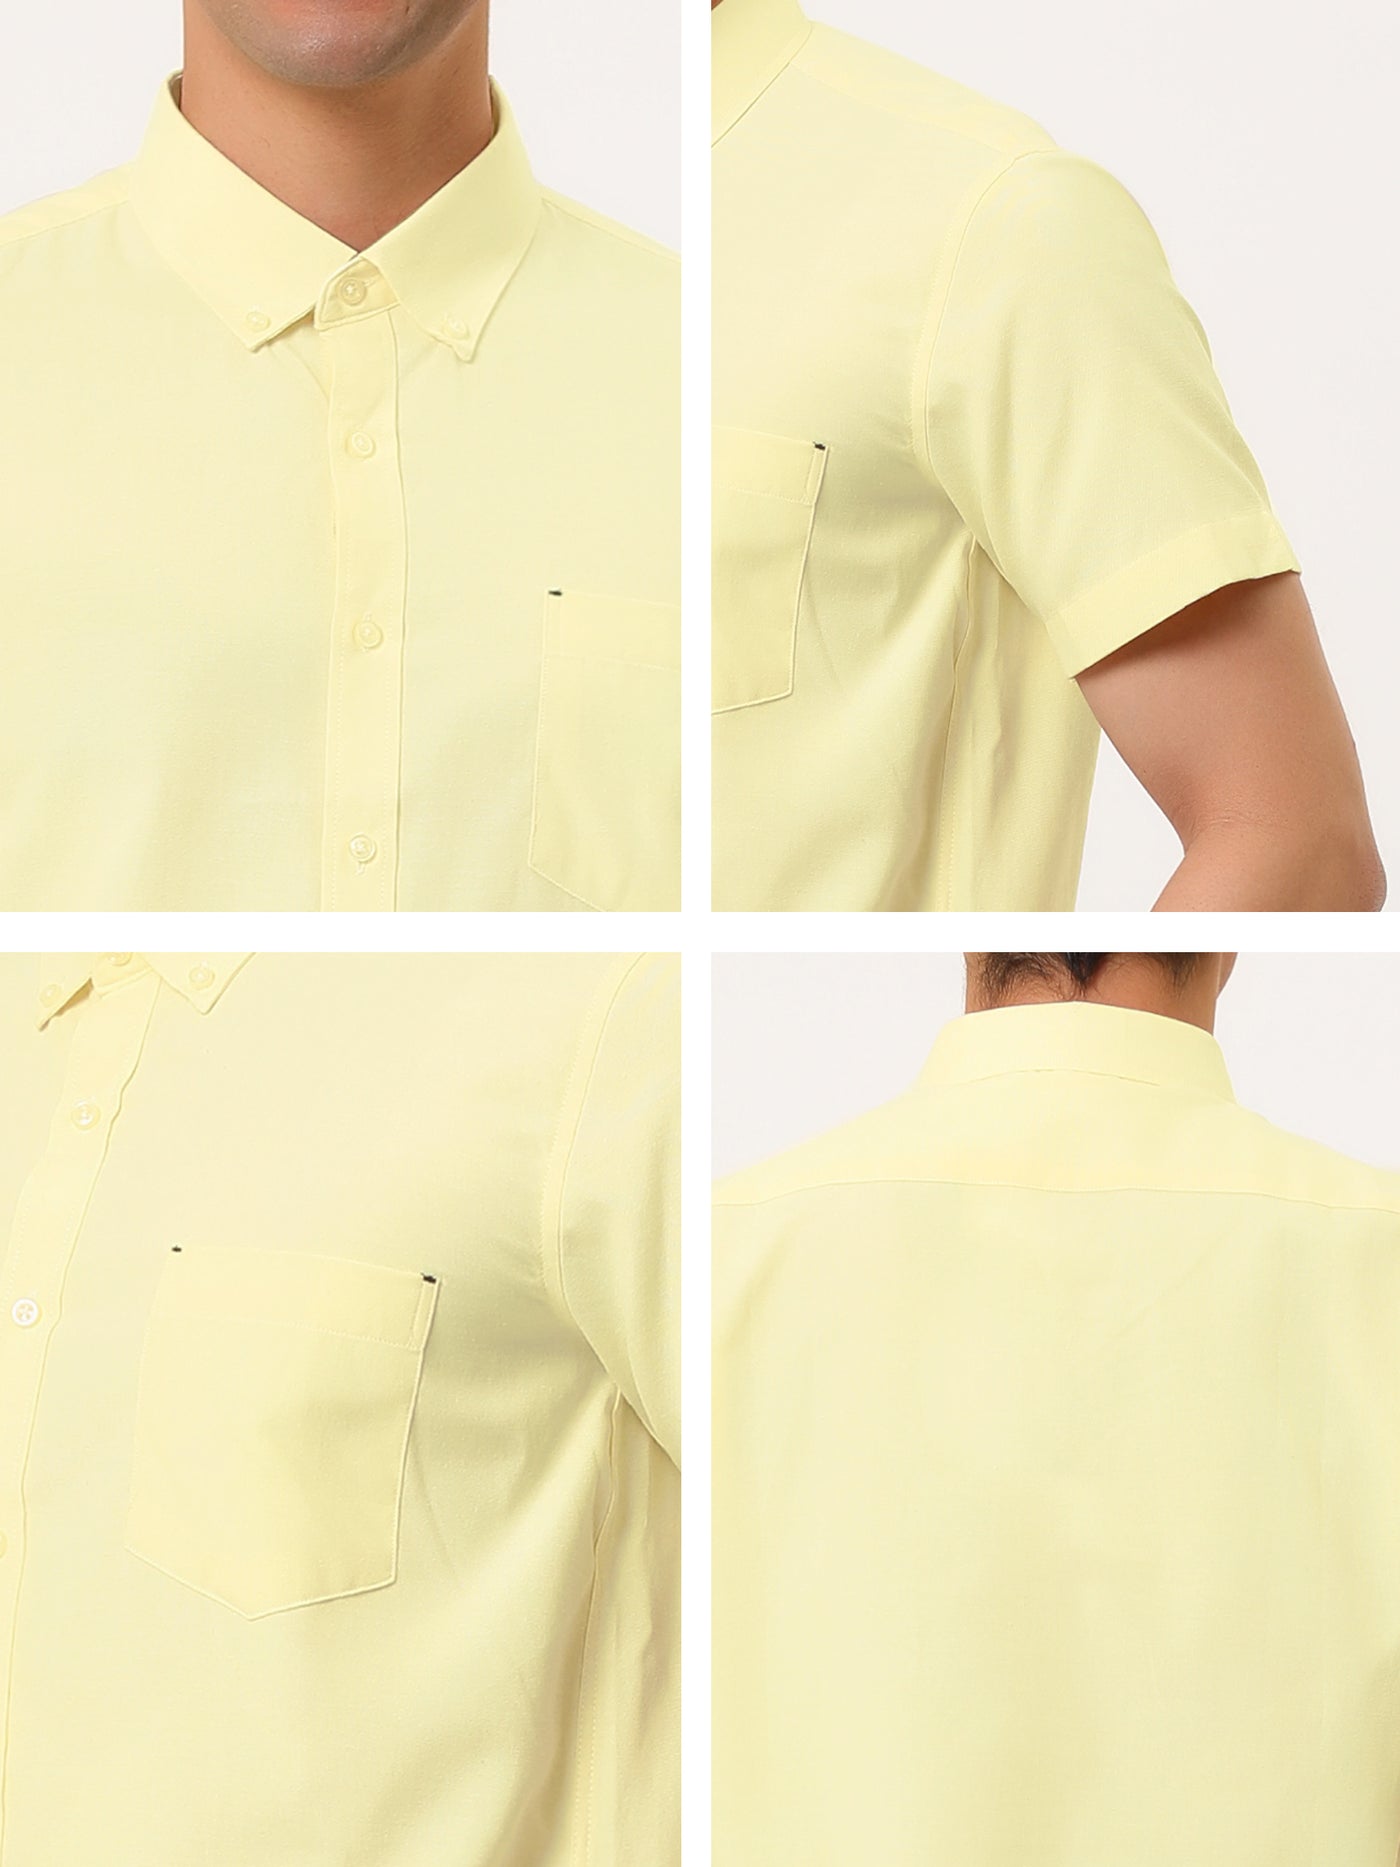 Bublédon Summer Solid Color Button Short Sleeve Dress Shirt